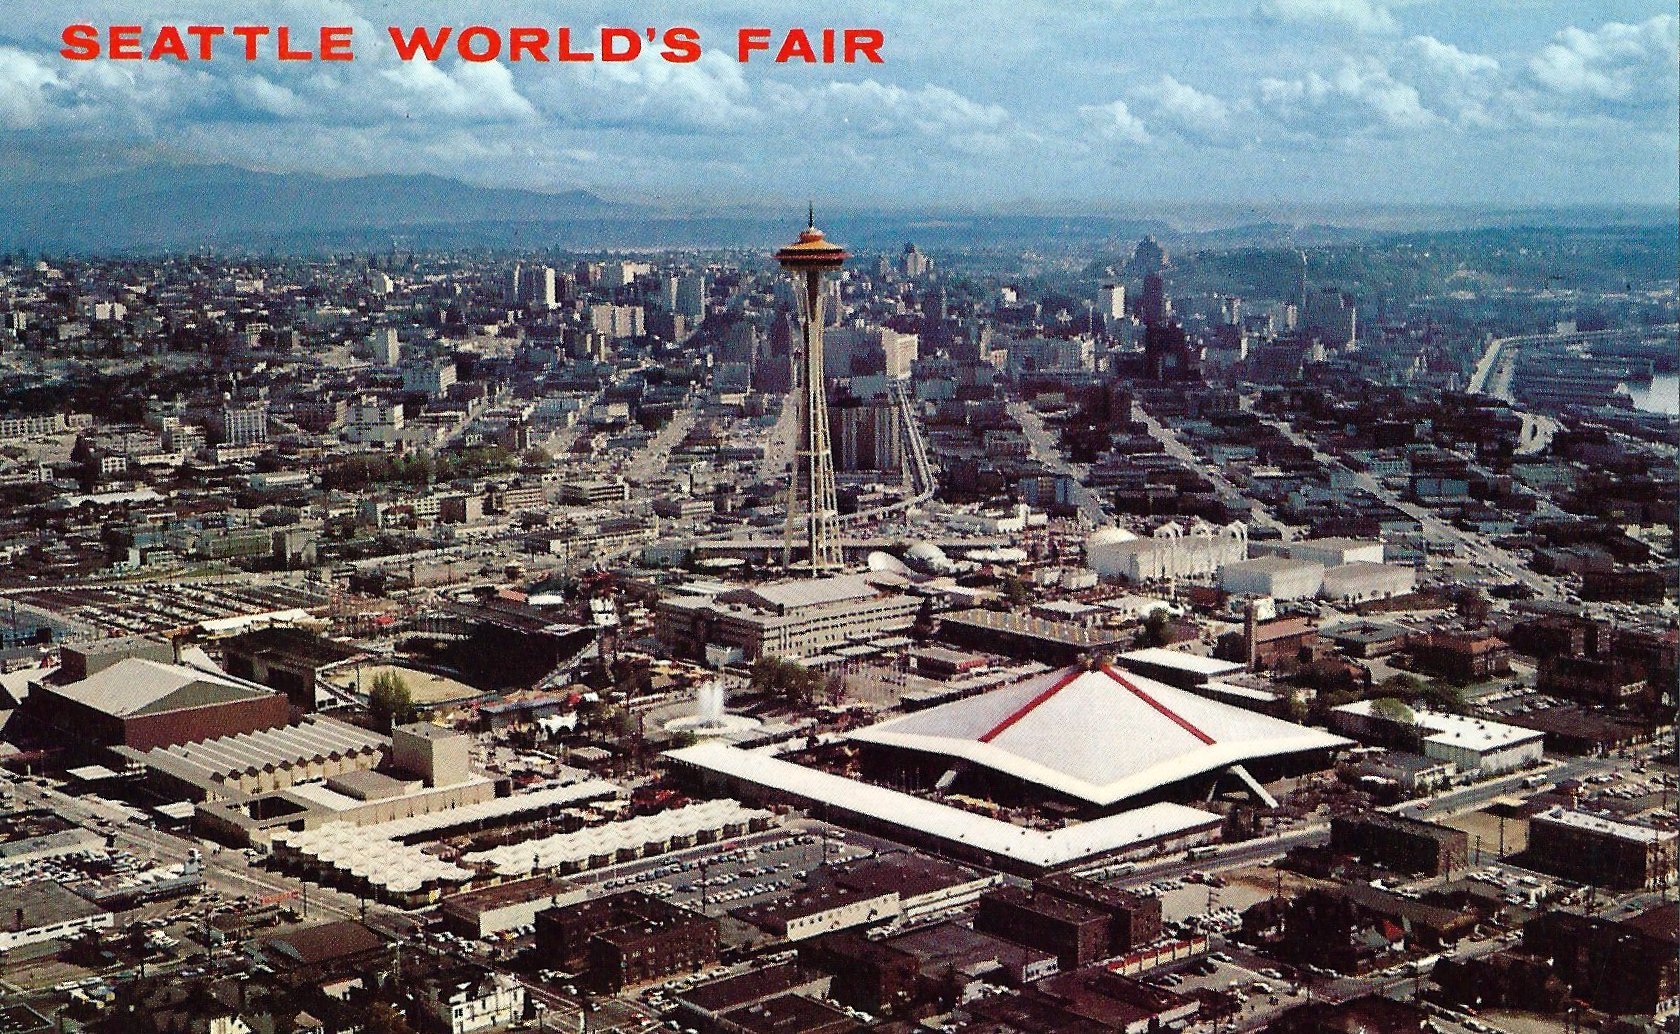 Seattle World's Fair opens April 21, 1962.